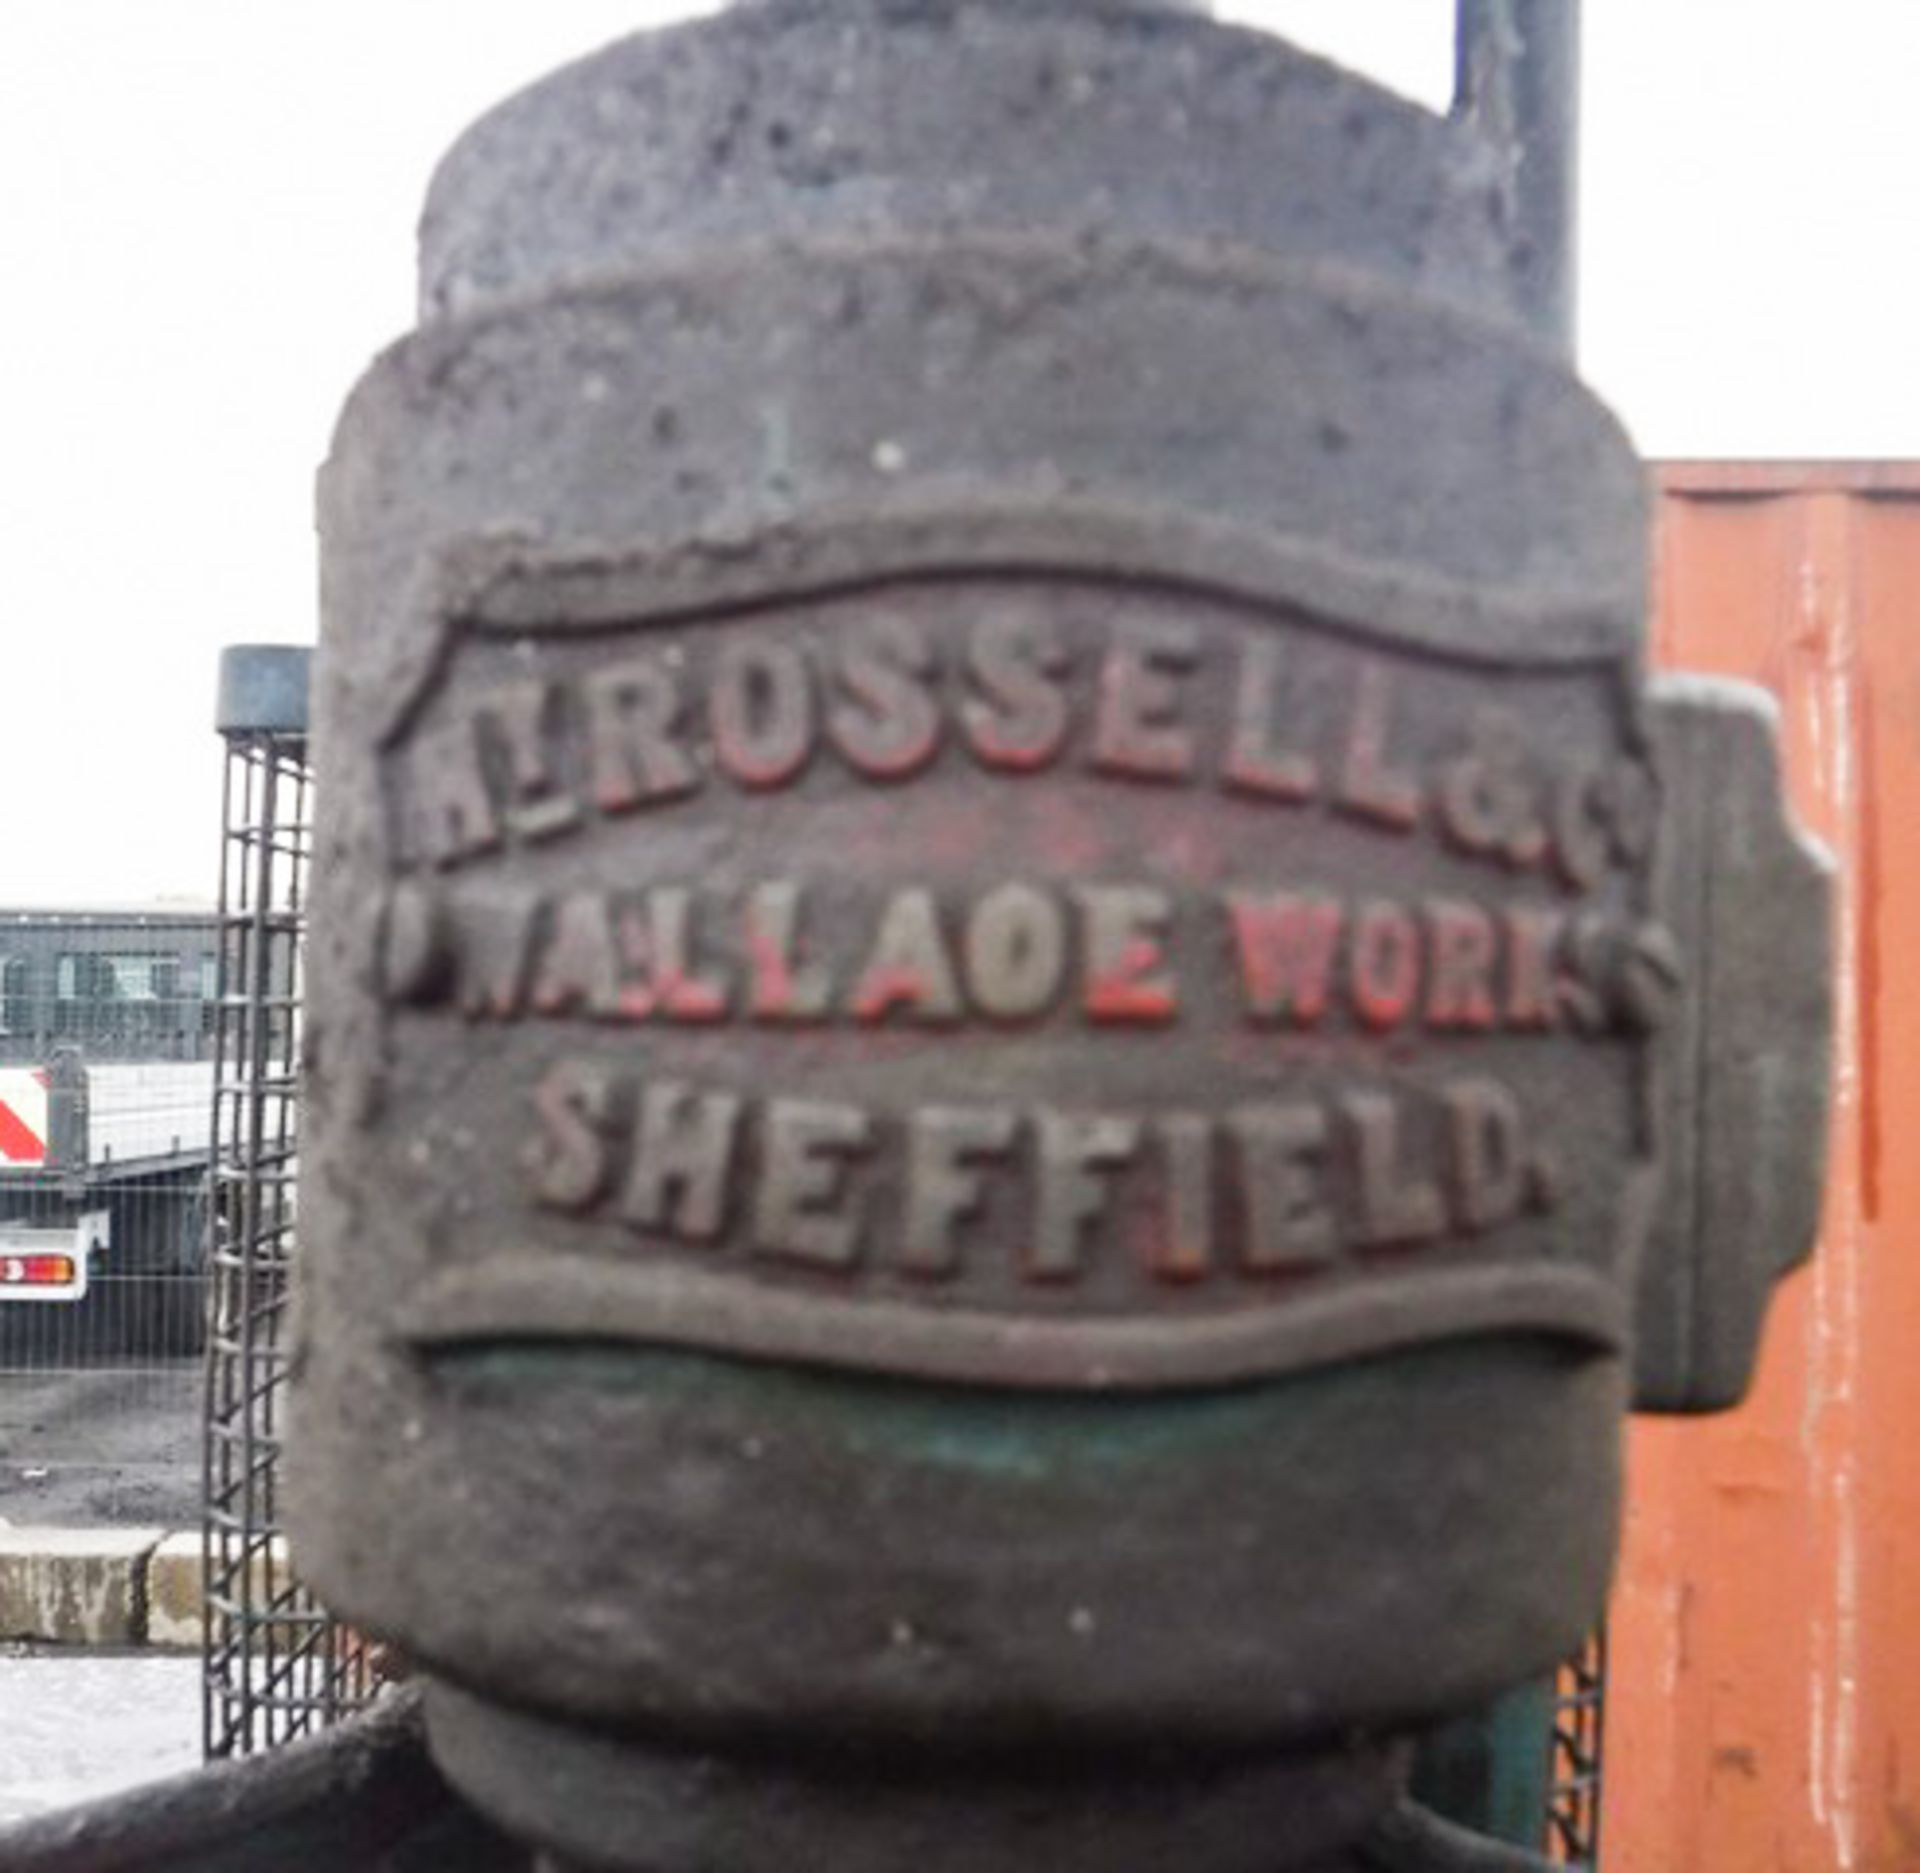 HT ROSSELL & CO WALLAOE WORKS SHEFFIELD PILLAR DRILL - Image 3 of 3